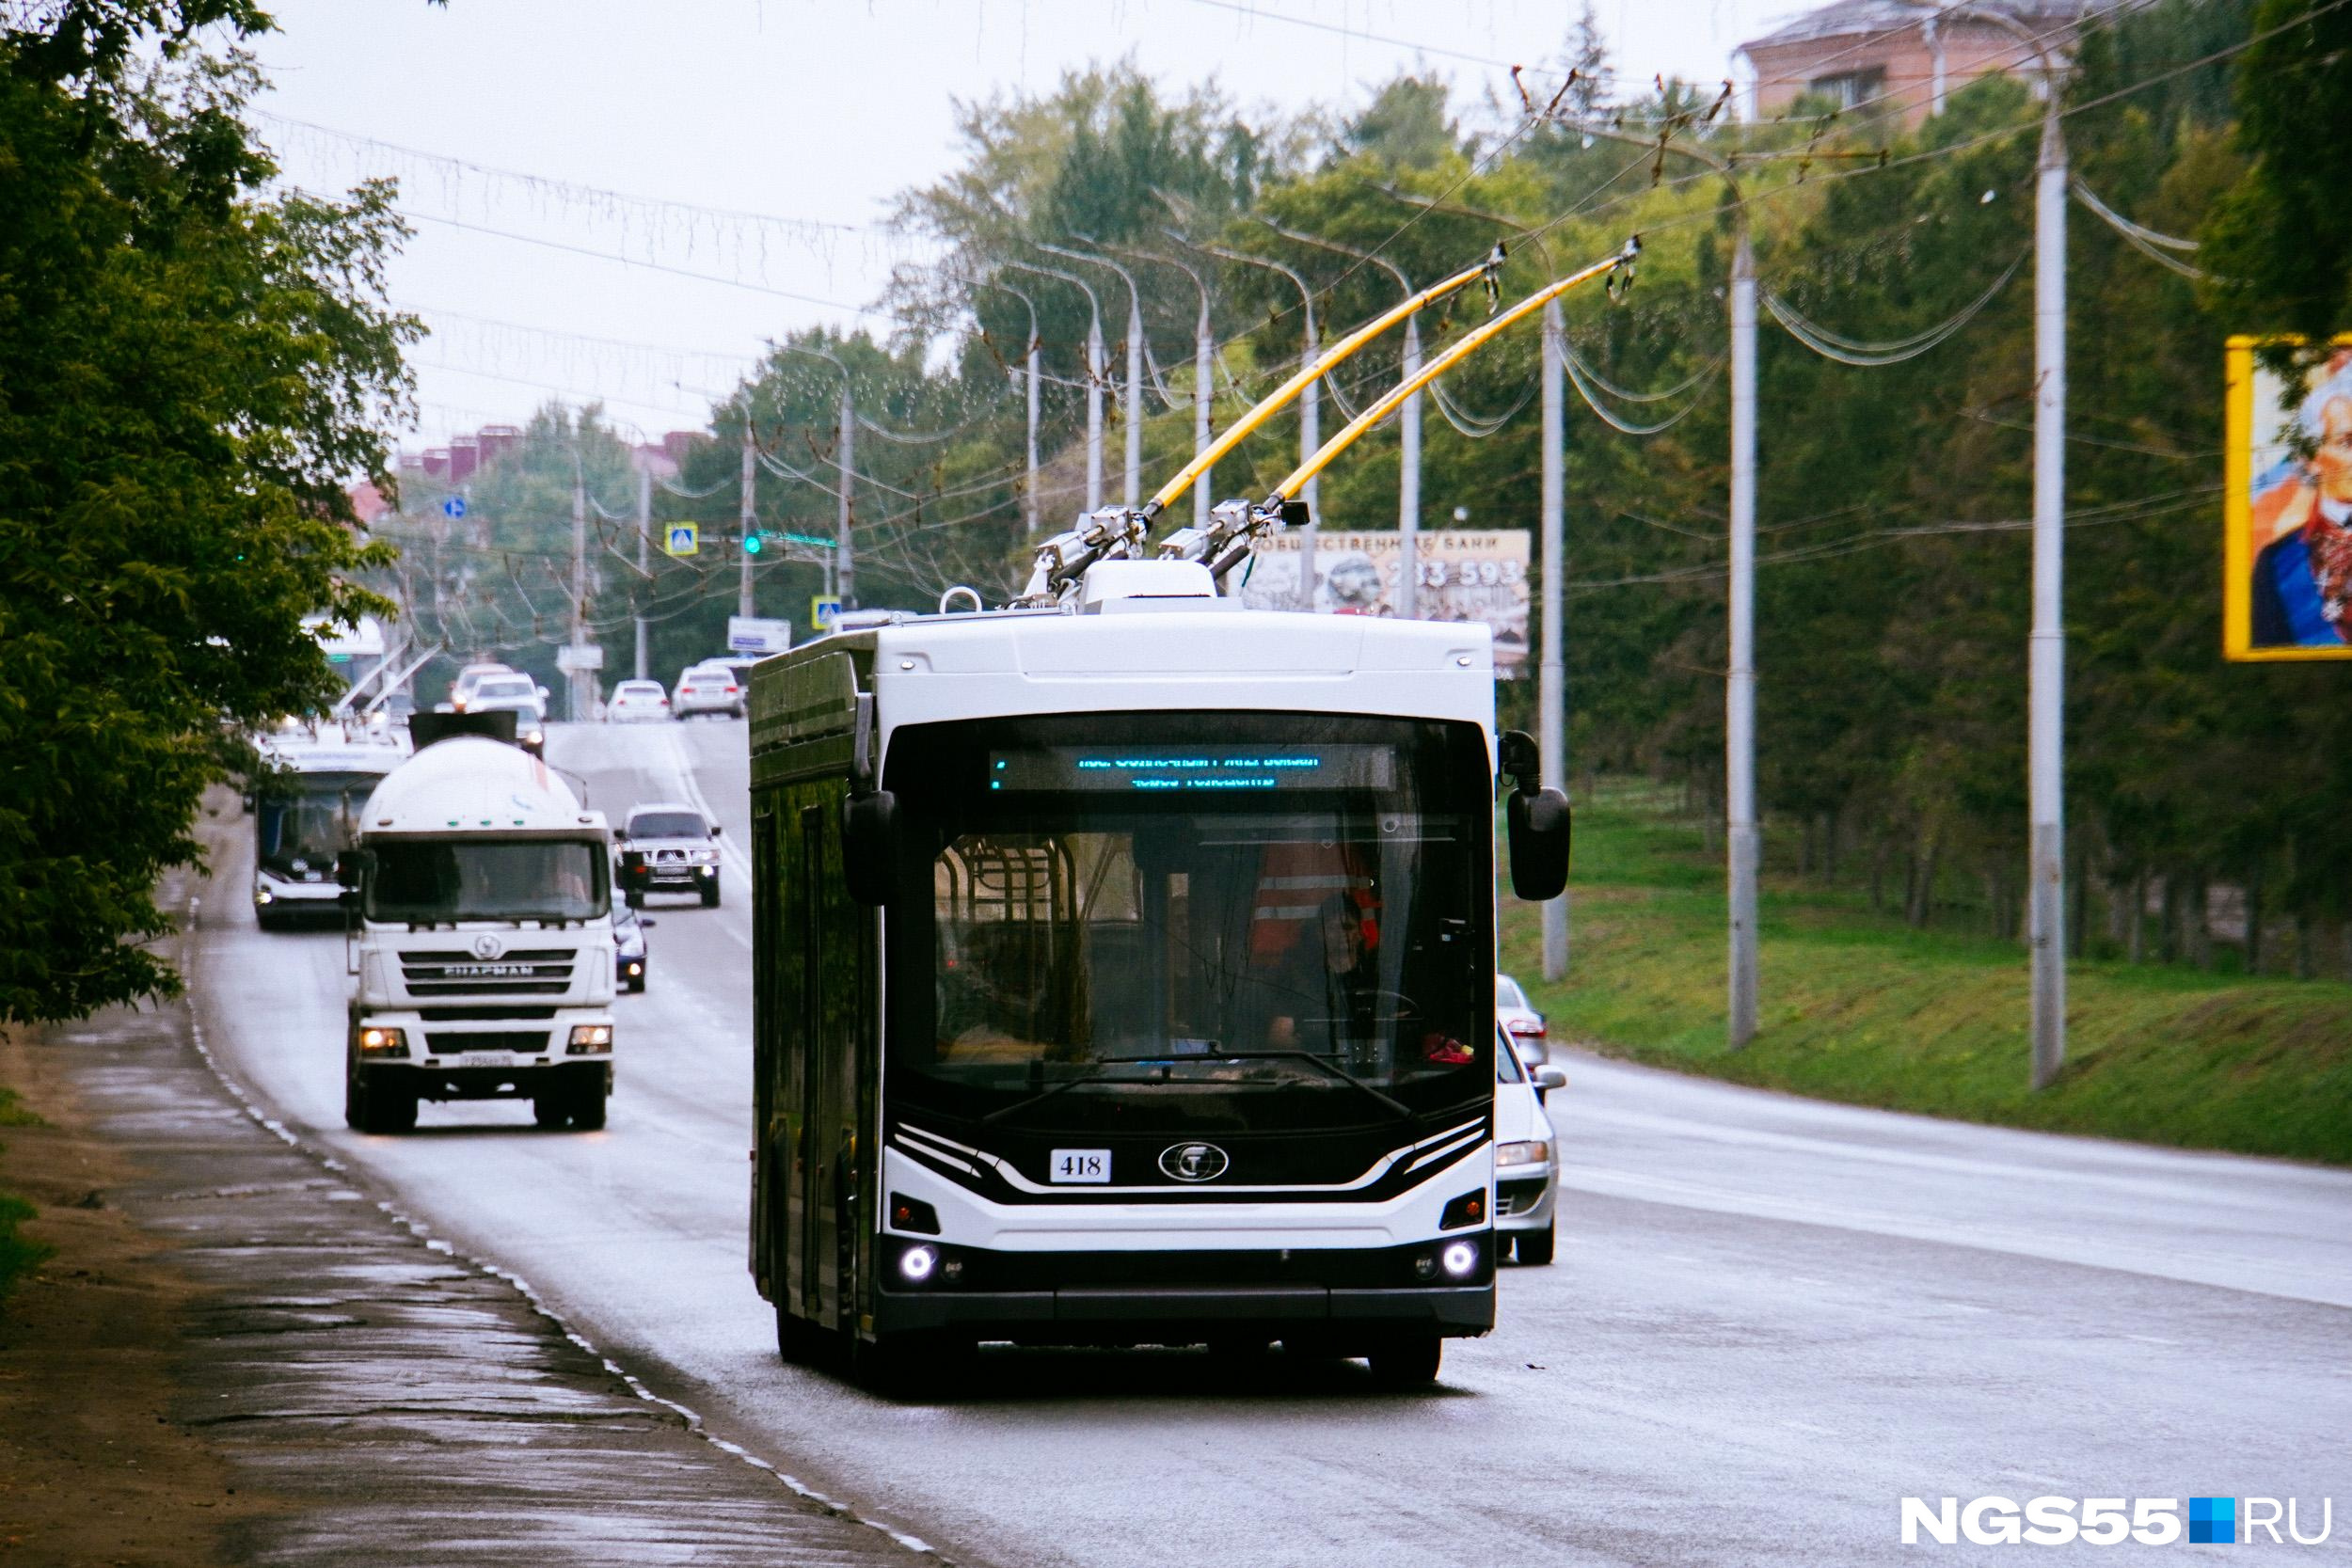 Из-за сильного ливня в Омске остановились троллейбусы